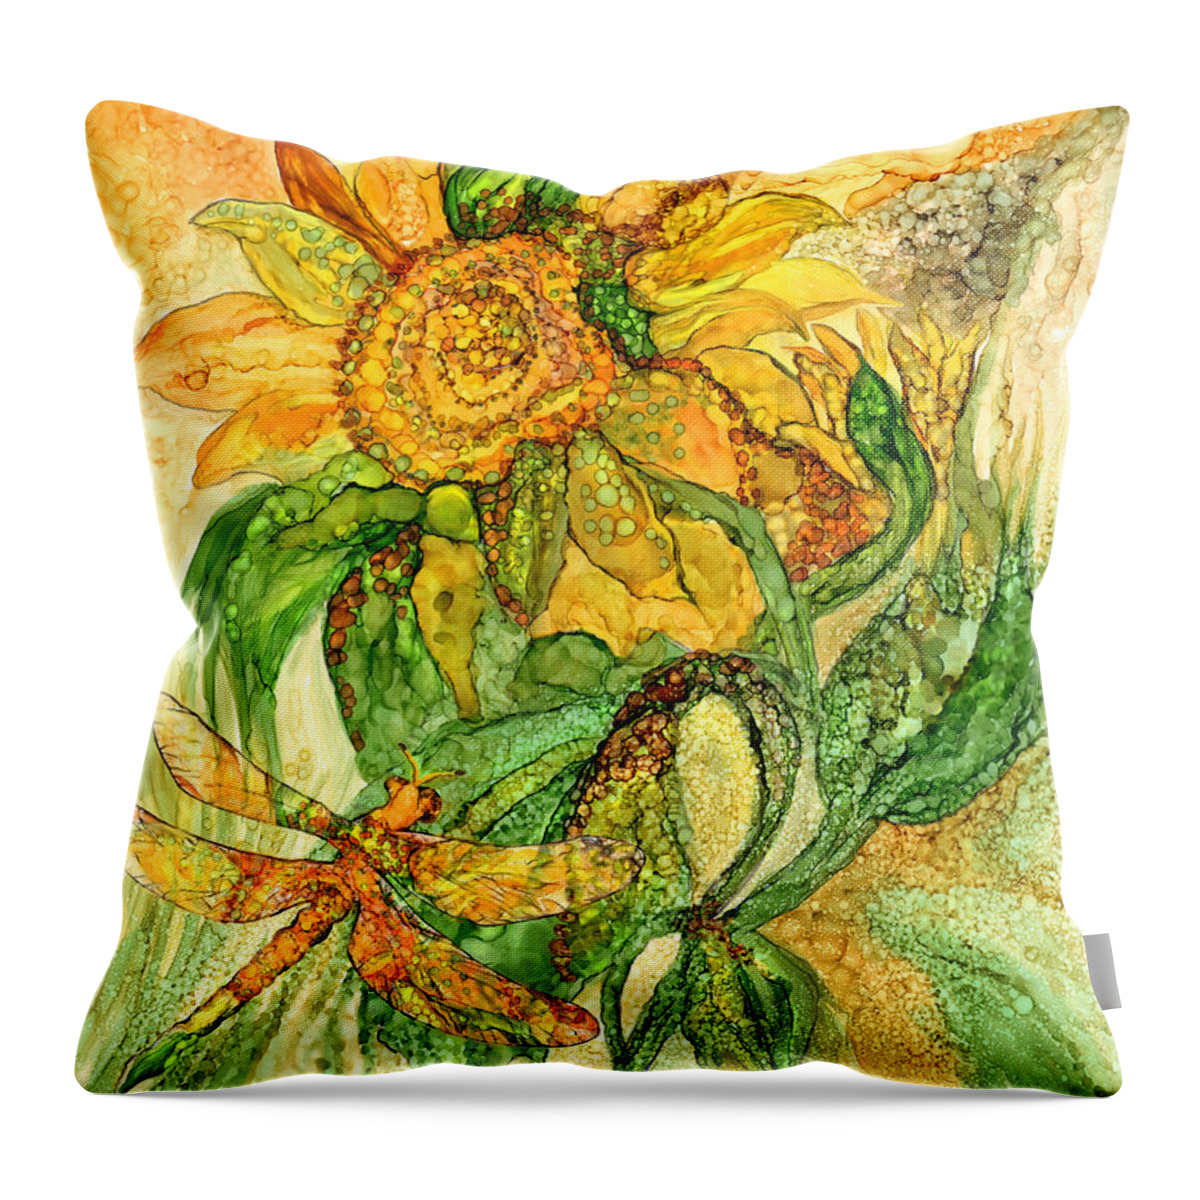 Carol Cavalaris Throw Pillow featuring the mixed media Sun Spirits - Sunflower And Dragonfly by Carol Cavalaris